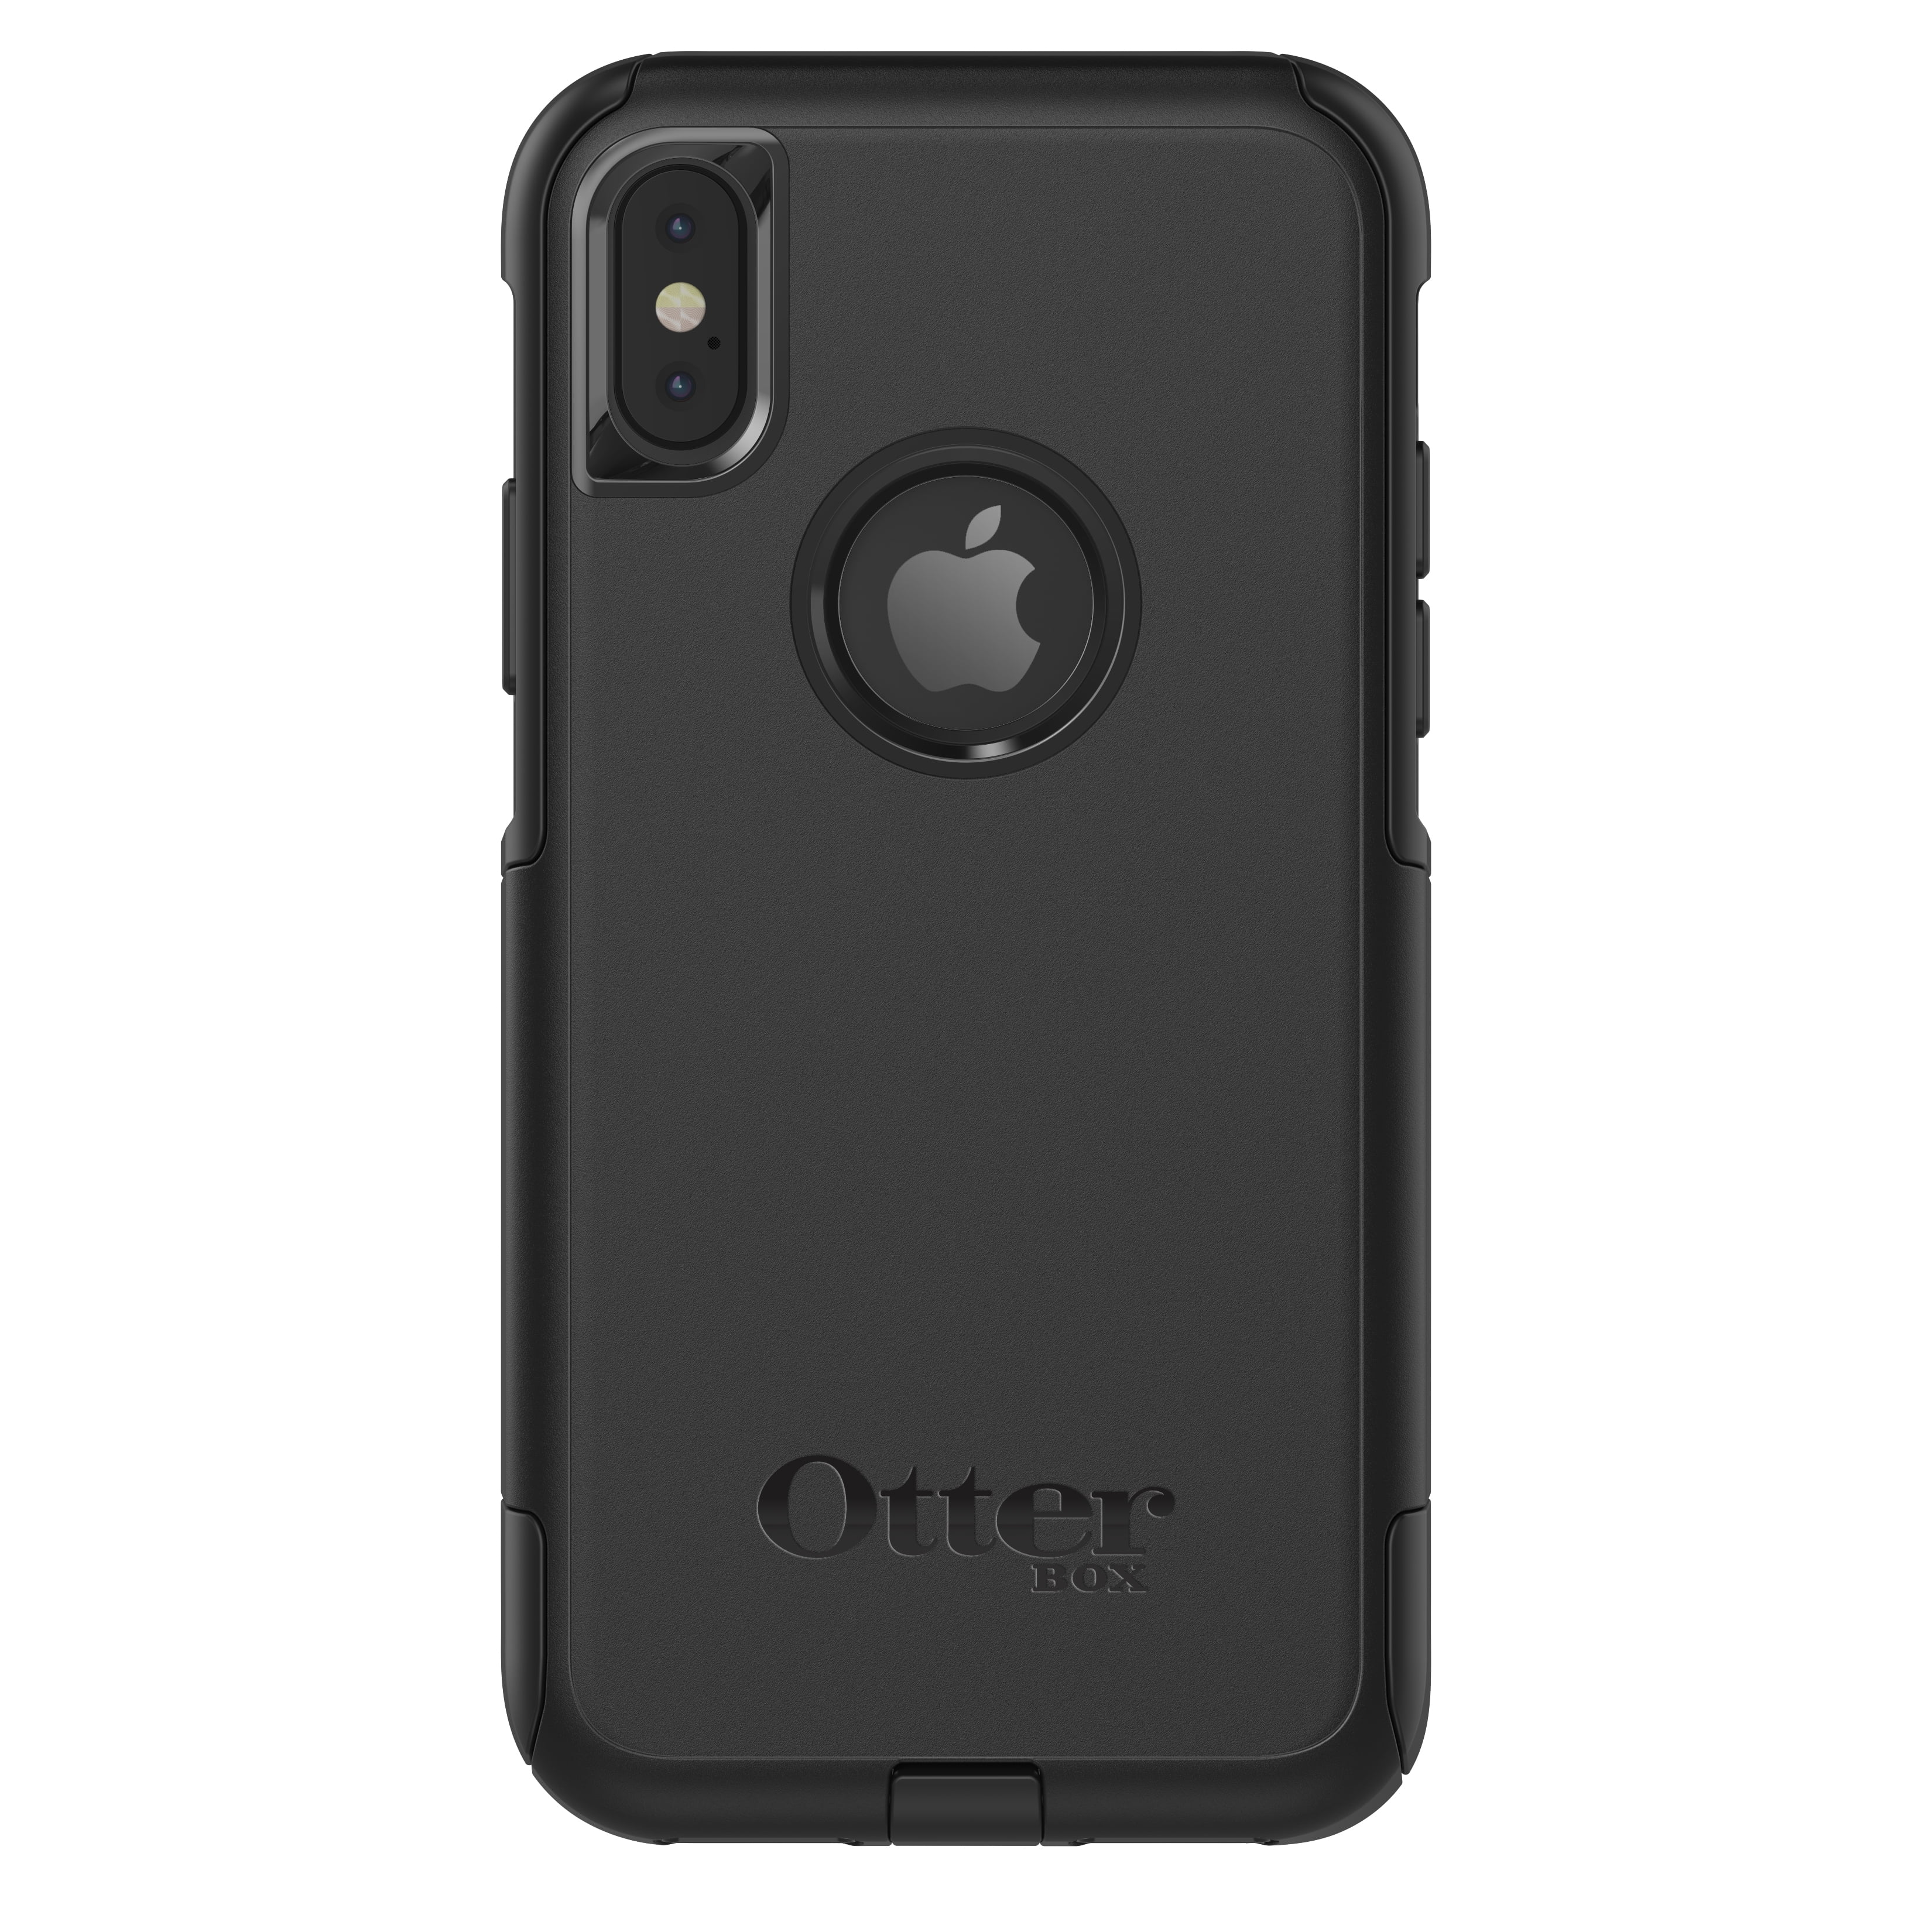 Otterbox Commuter Series Case For Iphone X Black Walmart Com Walmart Com